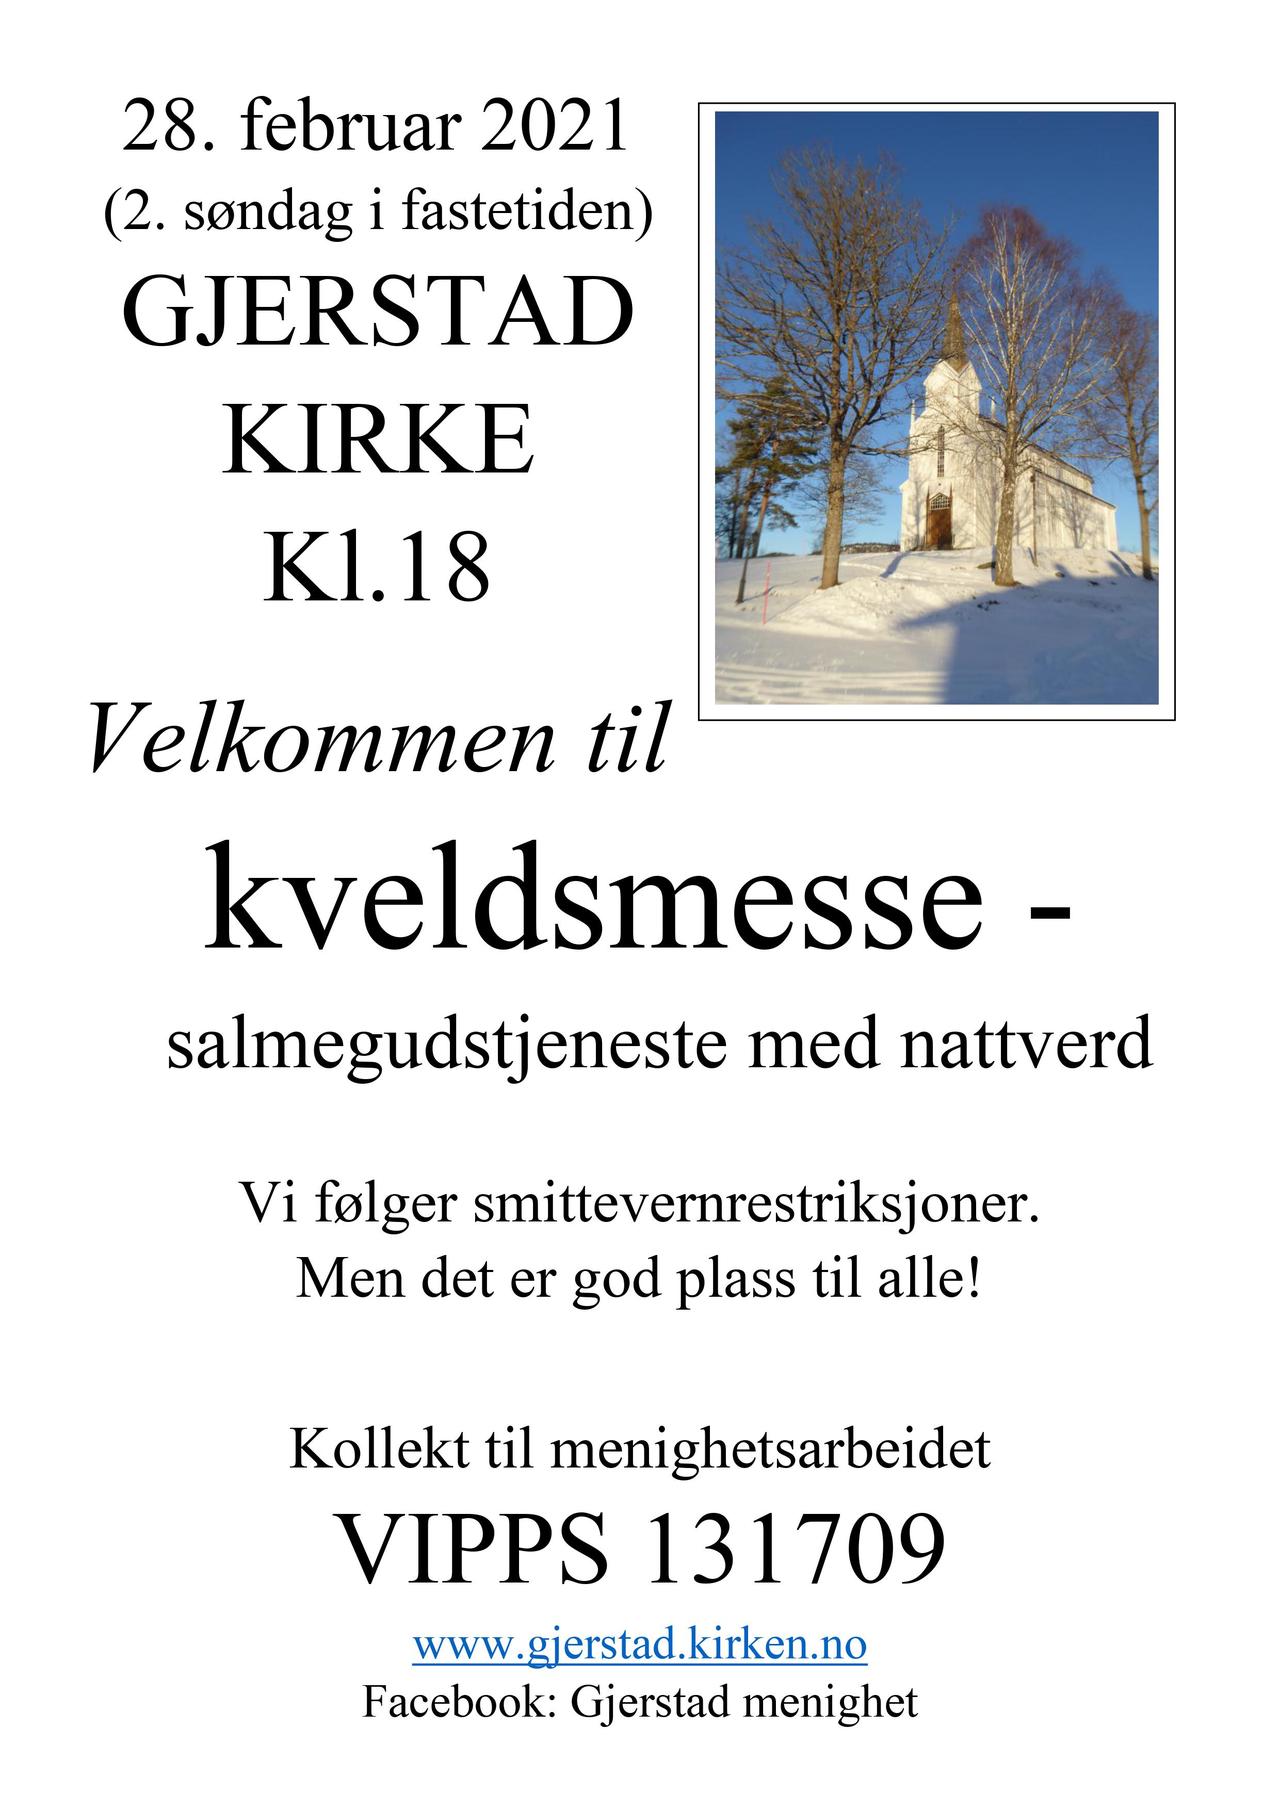 https://gjerstad.kirken.no/img/./28.08.2021.jpg